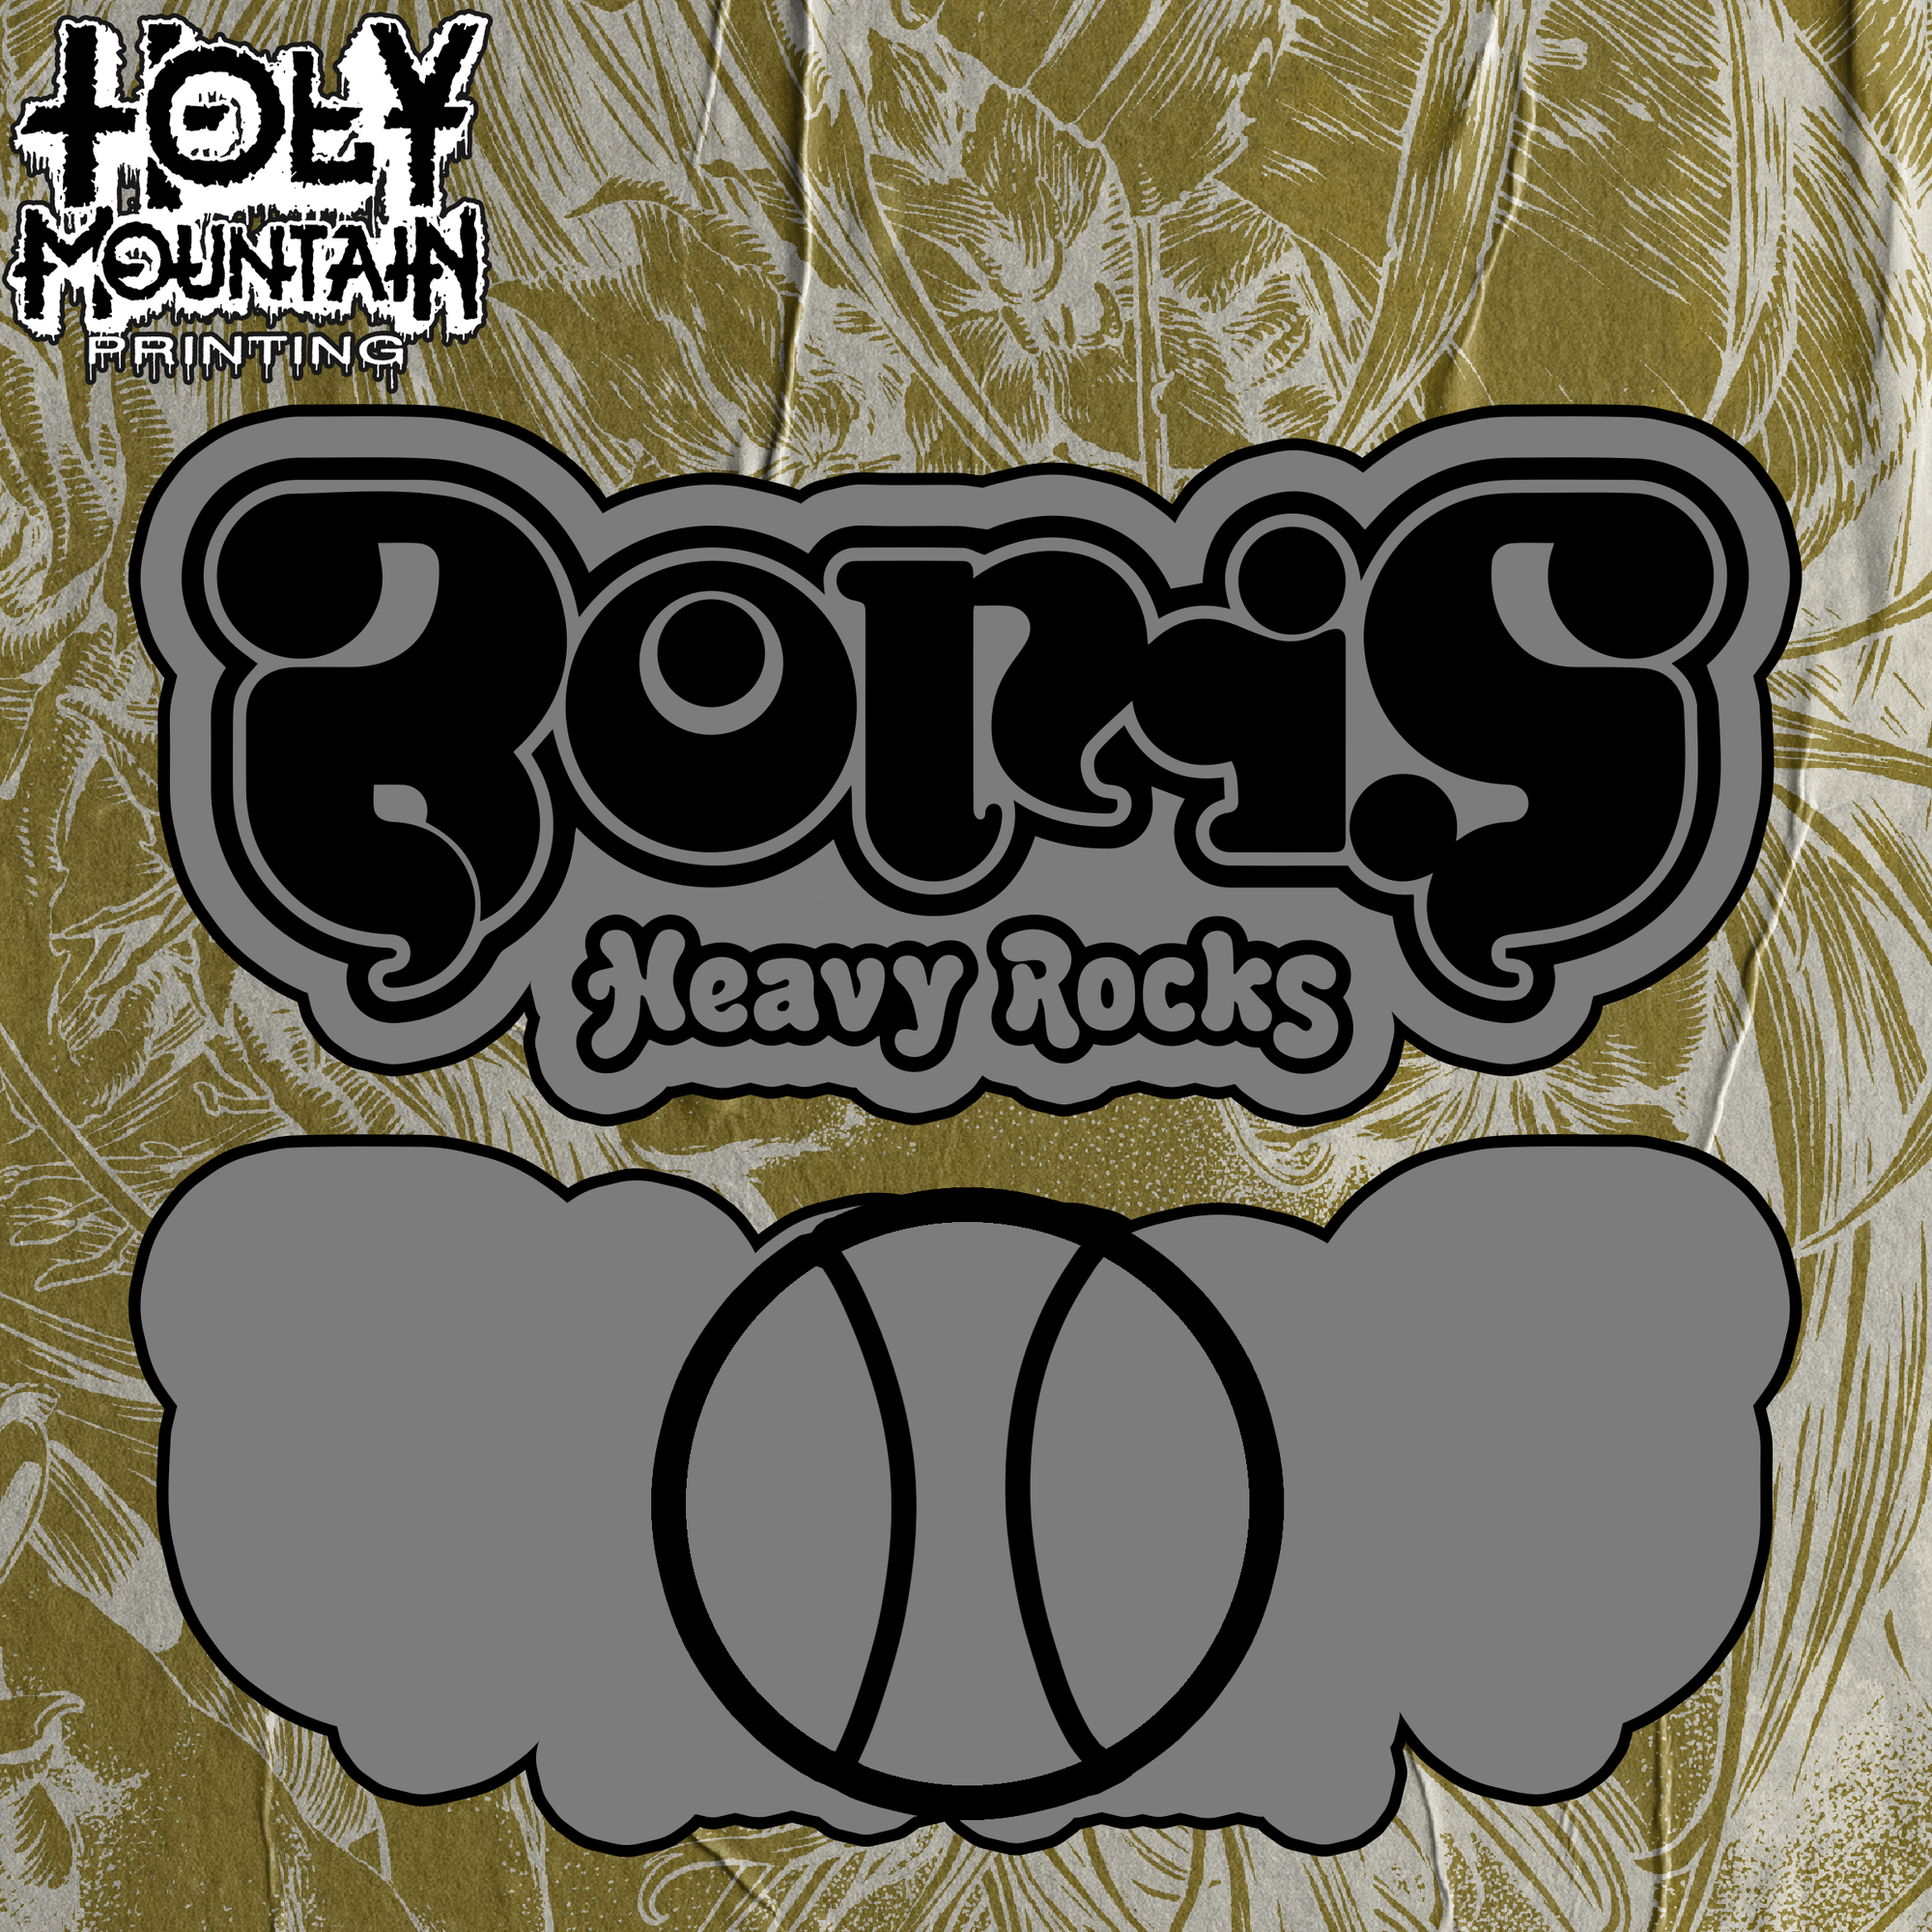 BORIS "HEAVY ROCKS" METAL PIN